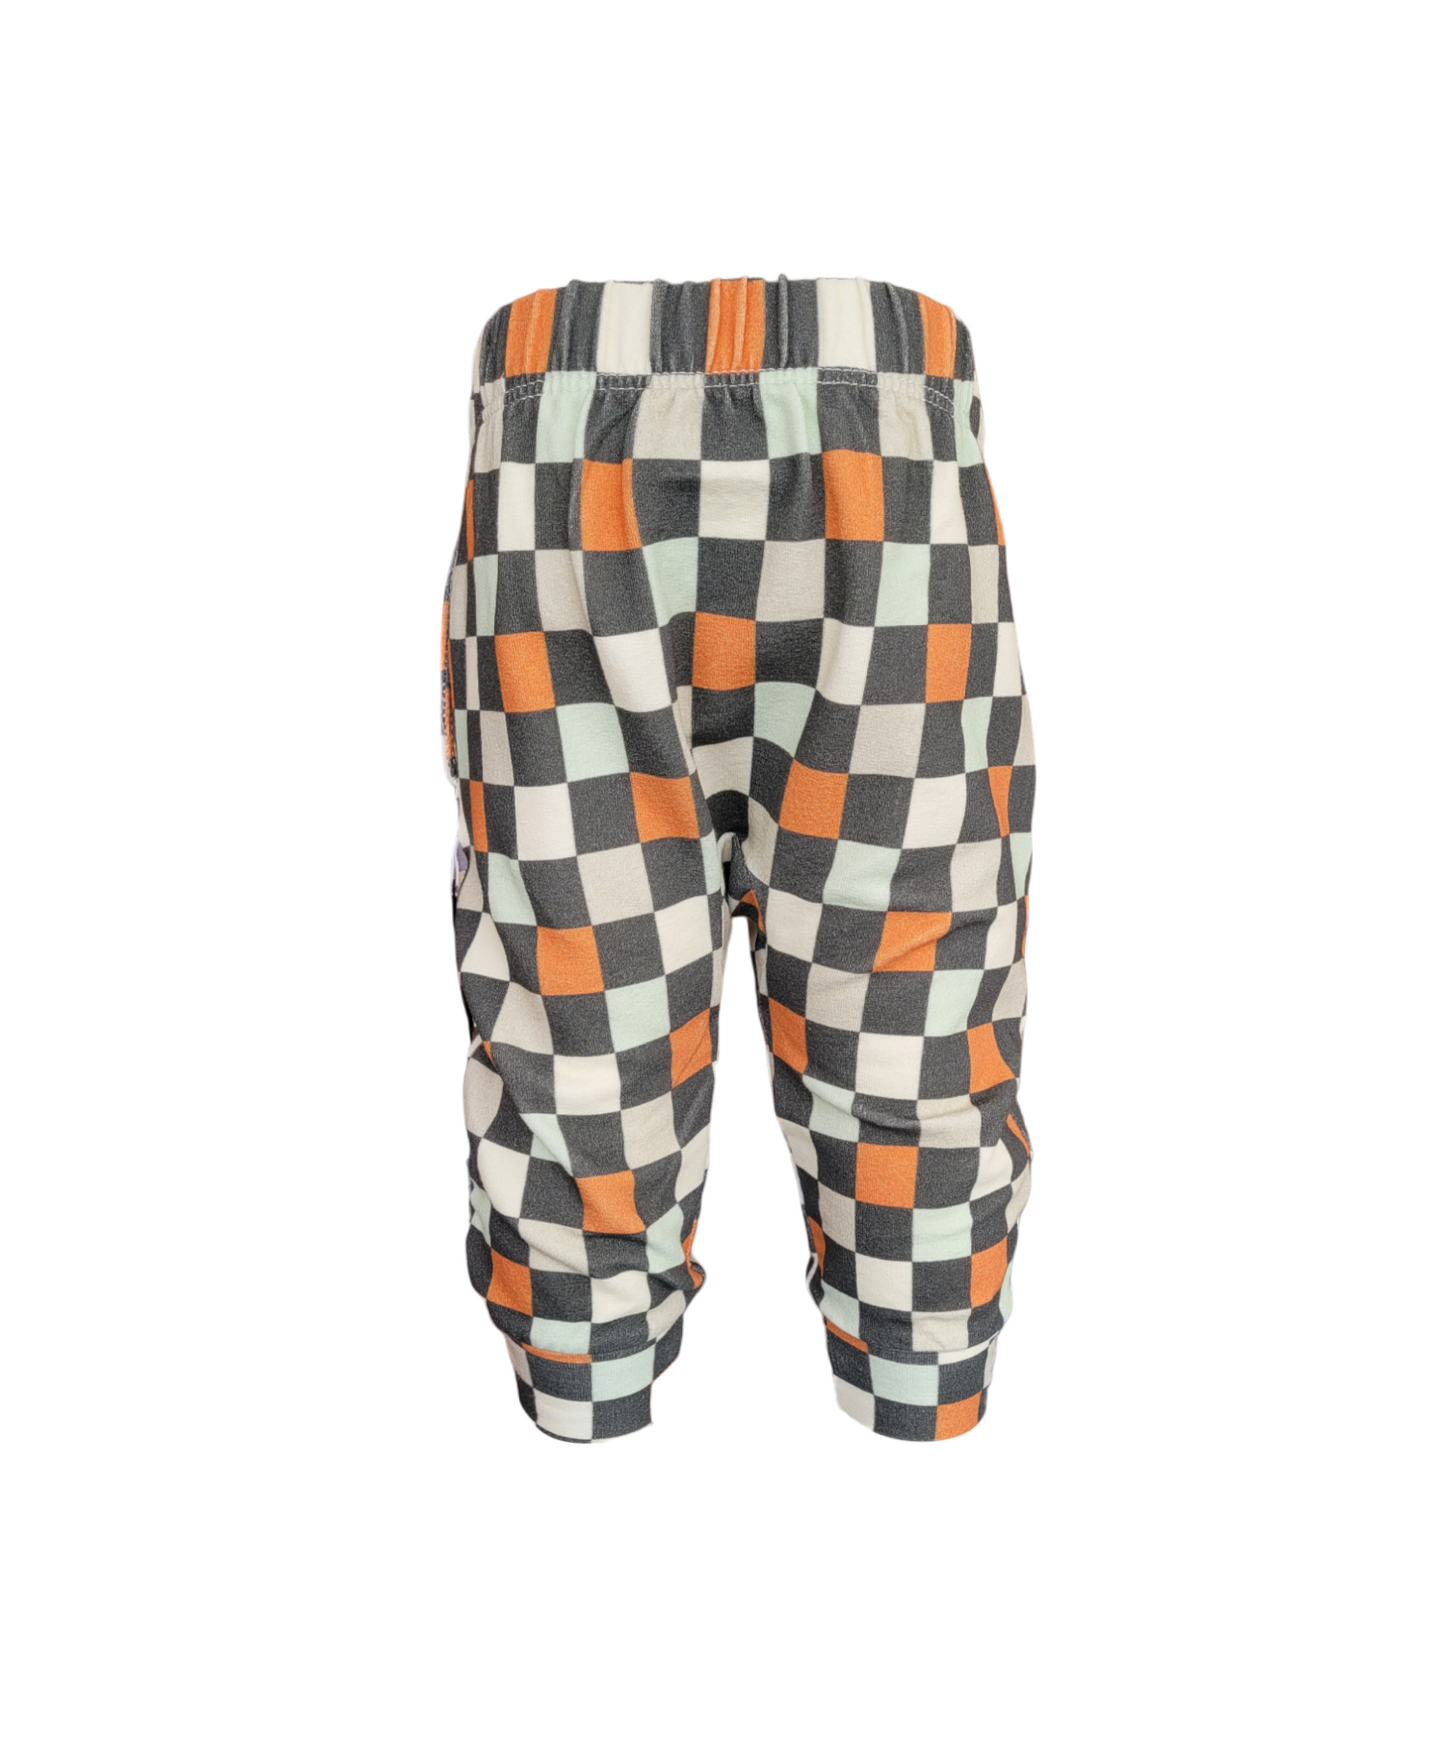 Front of Autumn Checkered Sweatpants. Organic Black, Orange, Olive and Cream Checkered Sweatpants.